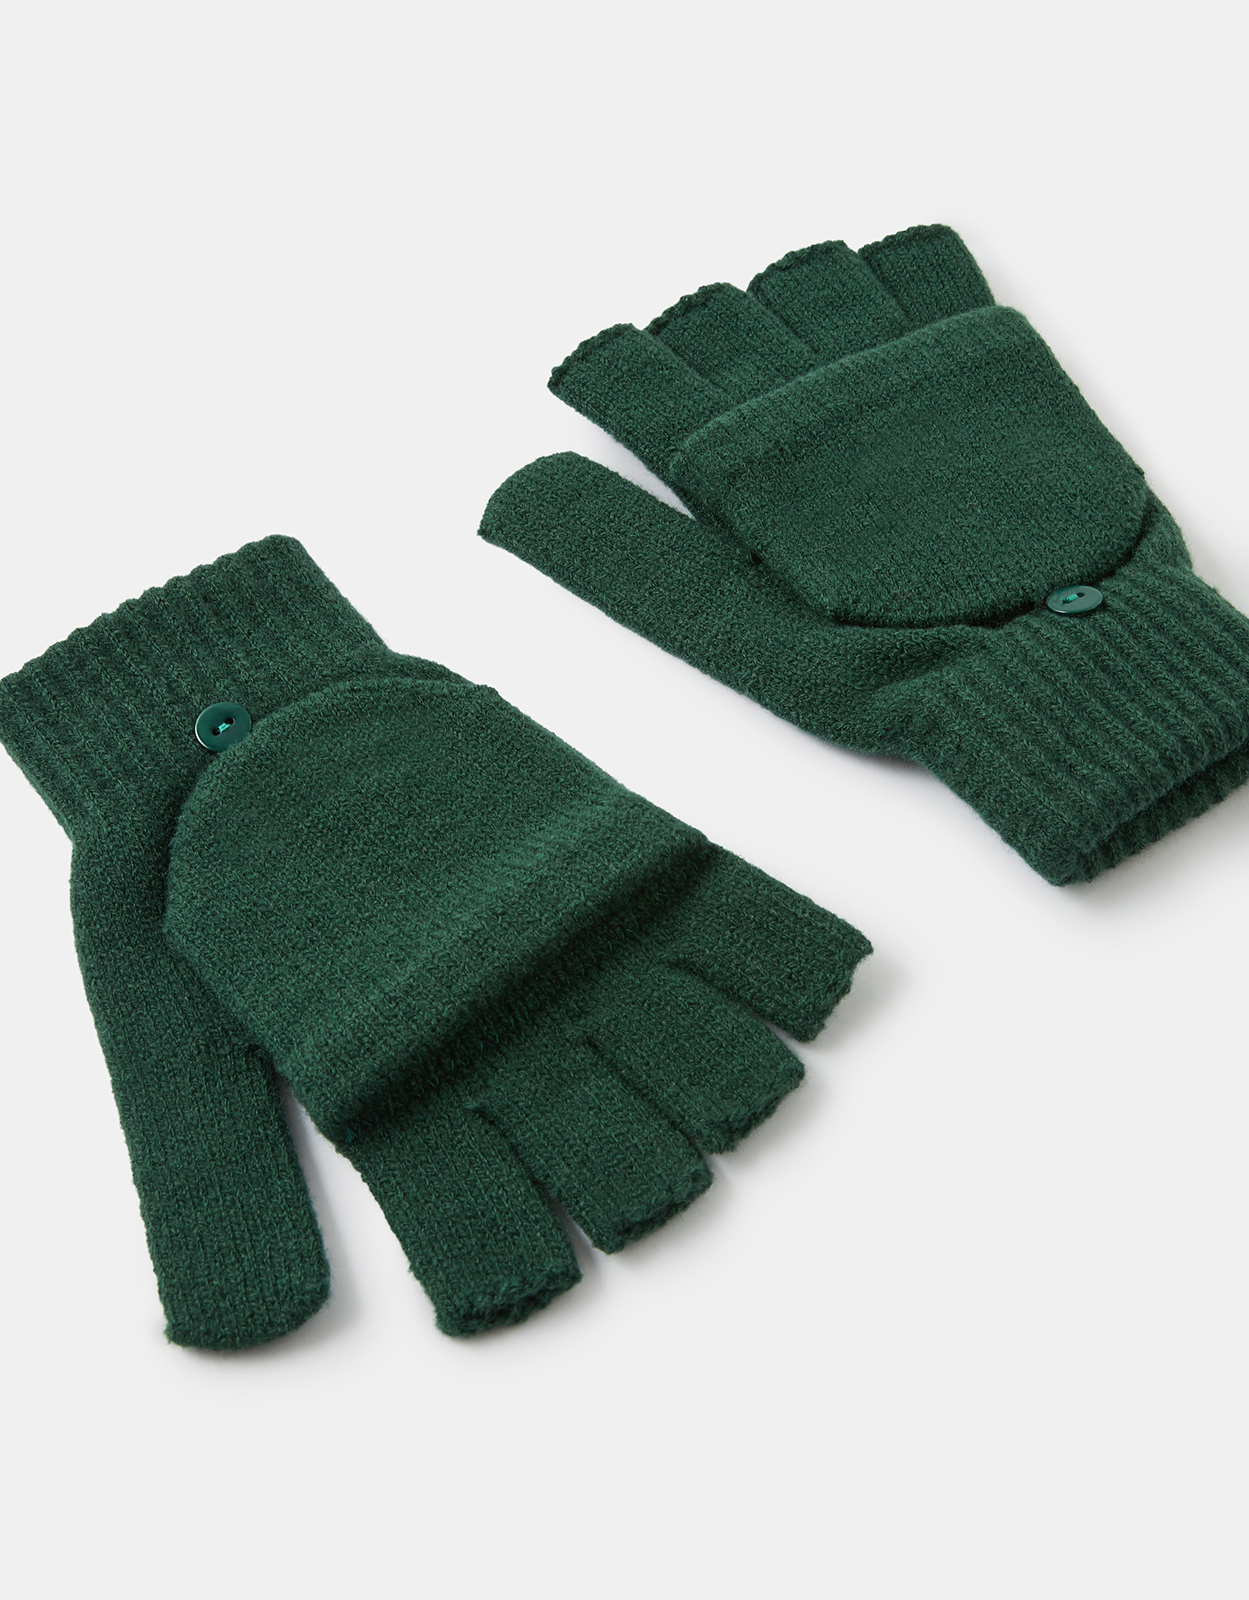 Accessorize Women's Green Plain Capped Gloves, Size: 20x8cm